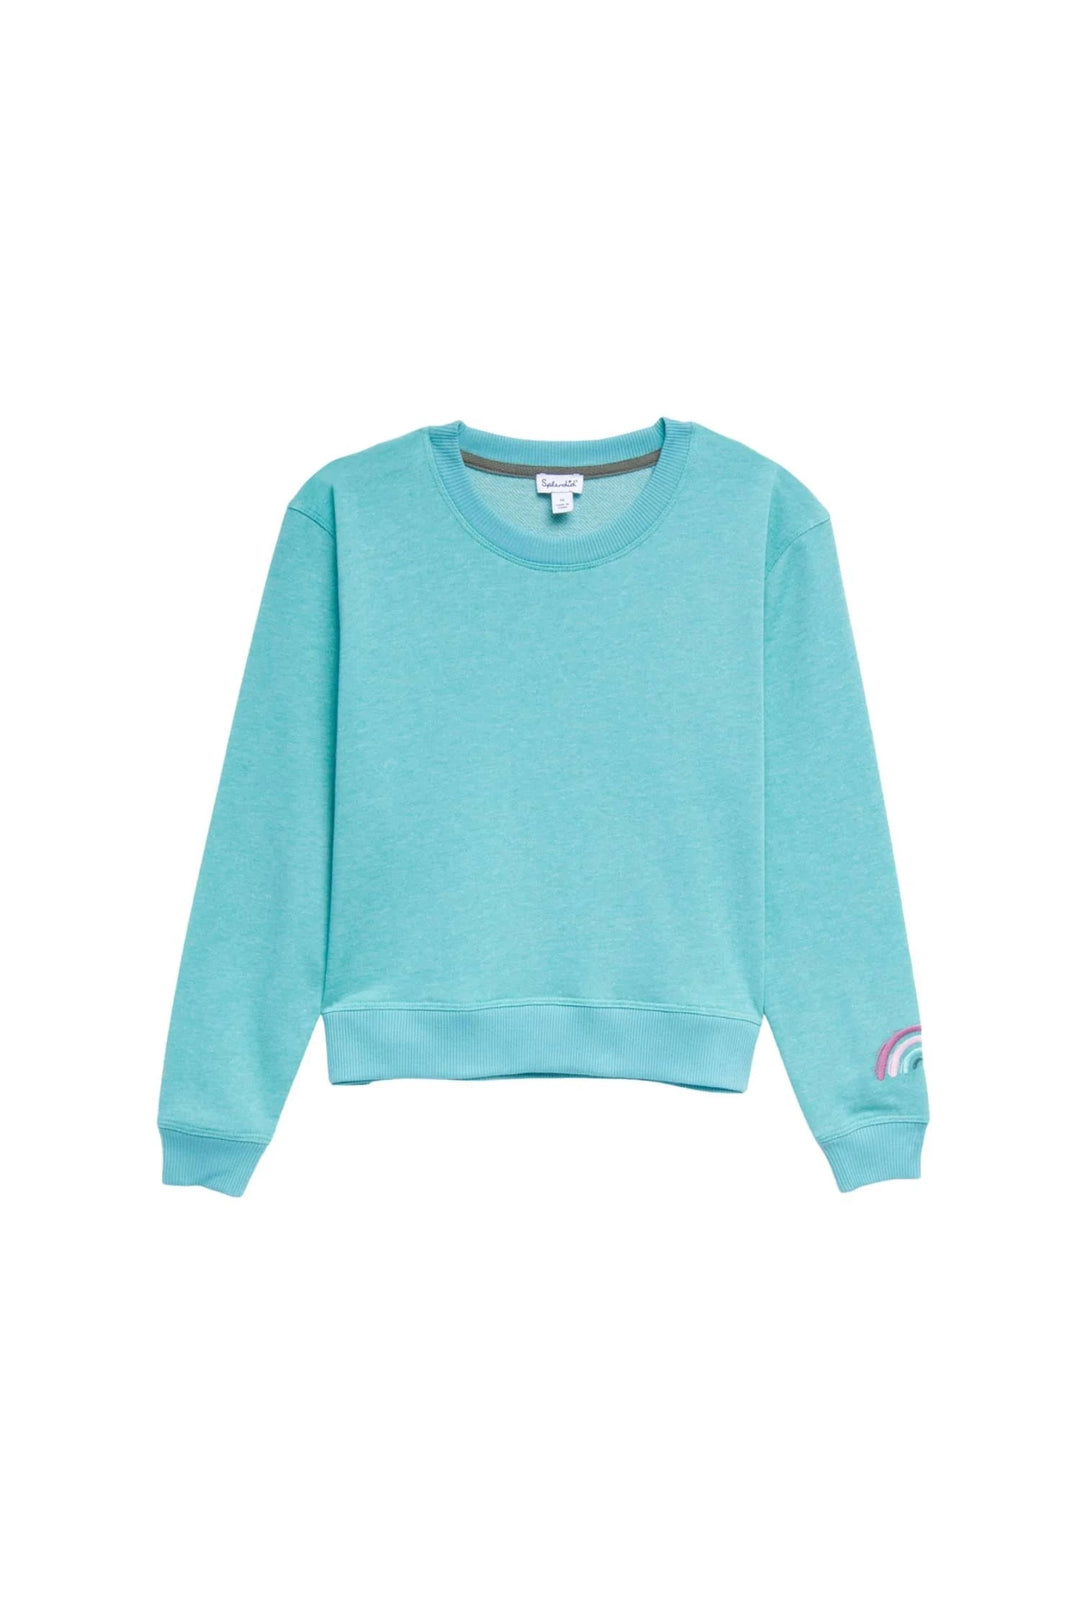 The Girls Aqua Bay Rainbow Pullover Sweatshirt by Splendid